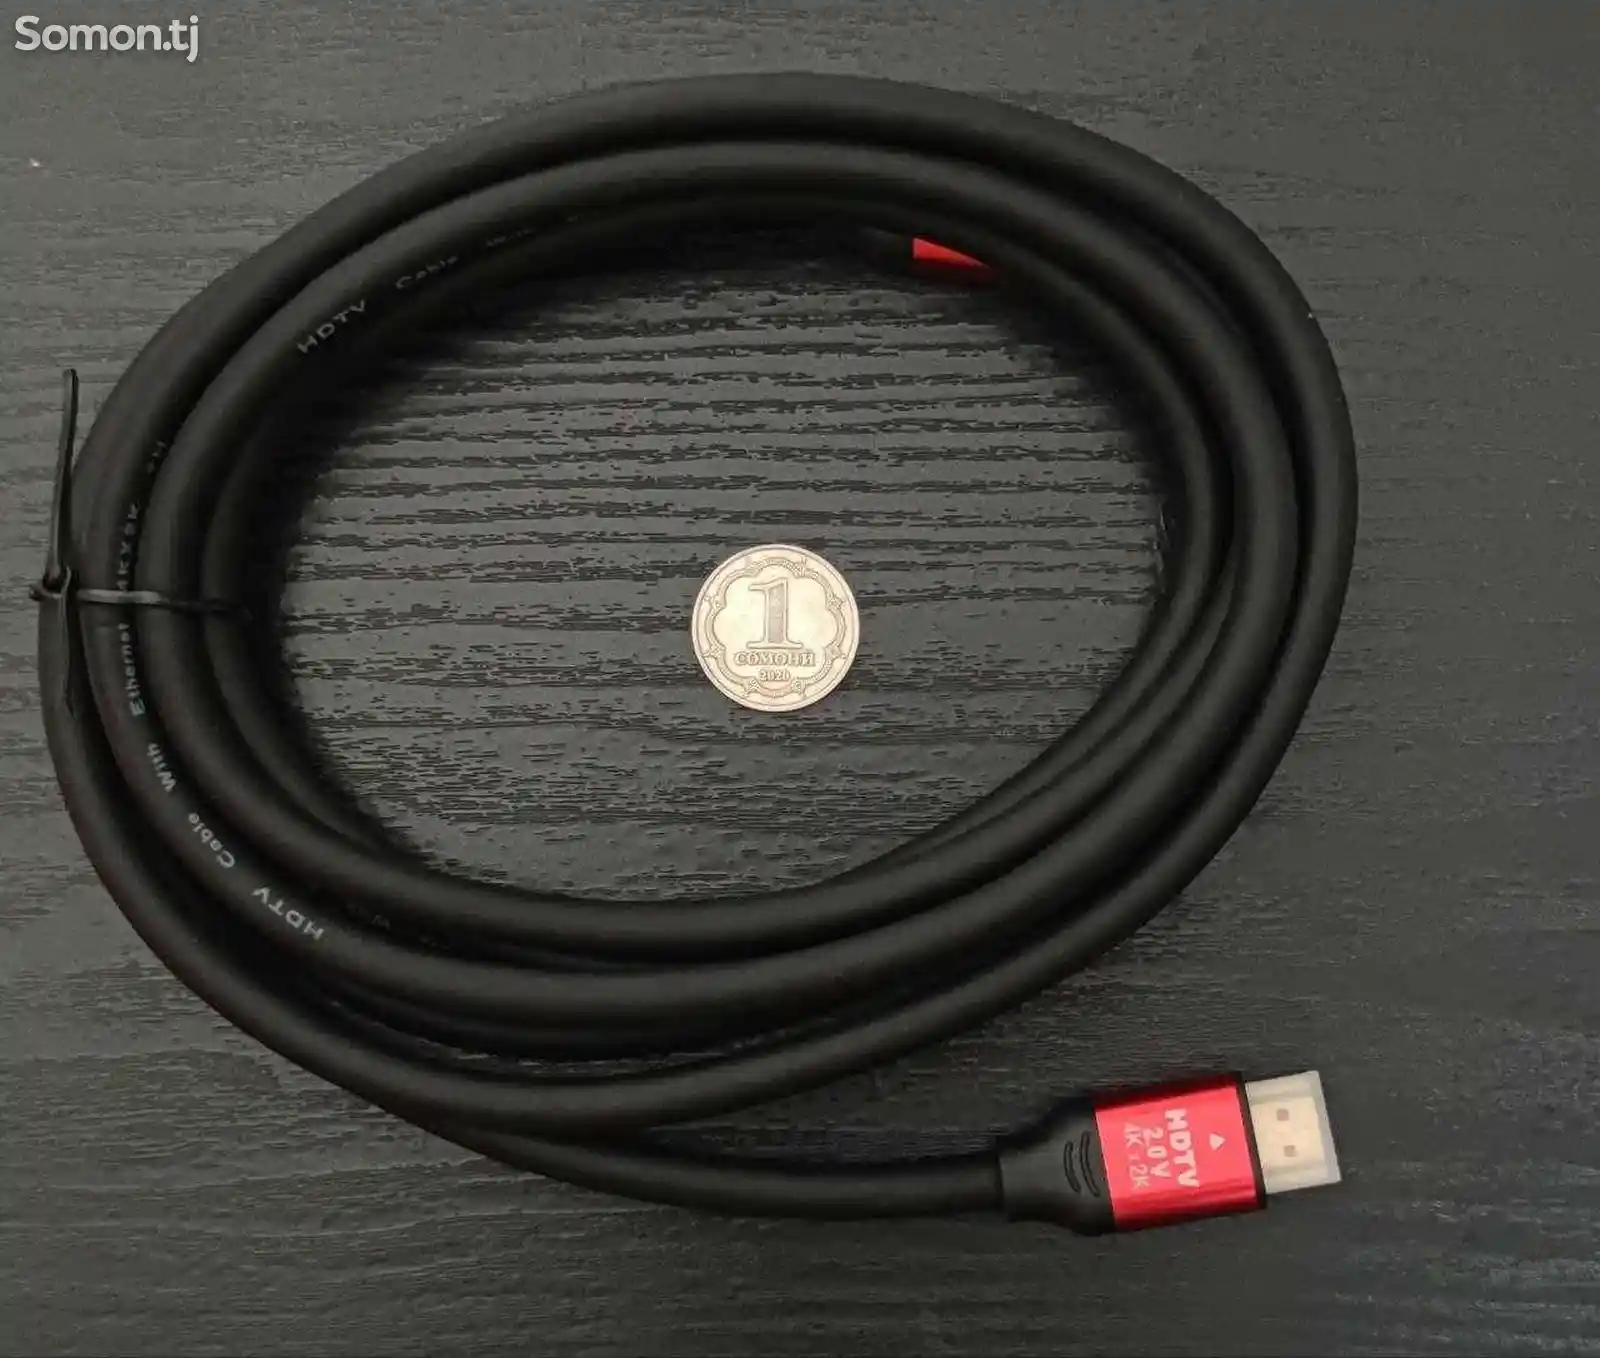 Кабель HDMI 3-метра